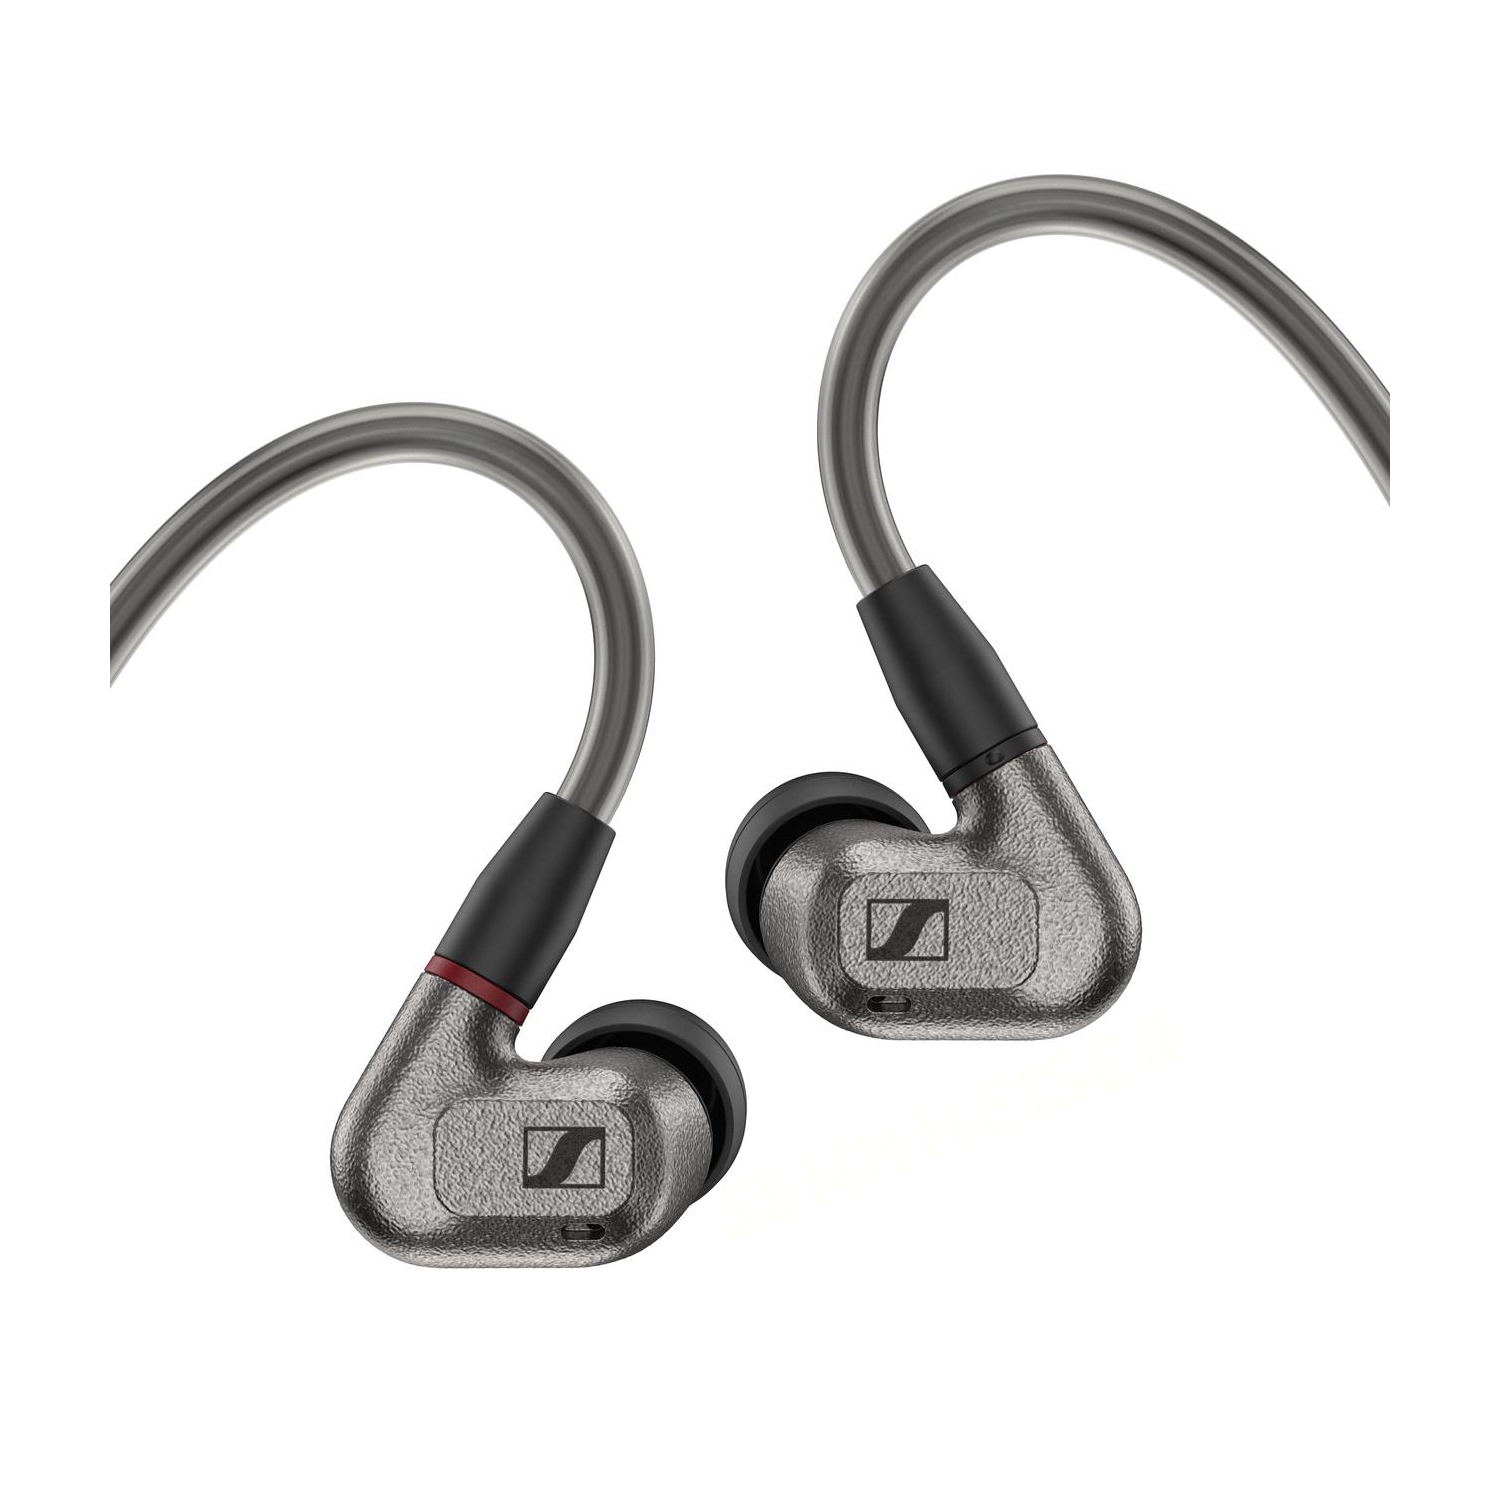 Sennheiser IE 600 Audiophile In-Ear Monitors - TrueResponse Transducers, Dual-Resonator Chamber Technology, Detachable Cable w/ Flexible Ear Hooks, 2-Year Warranty